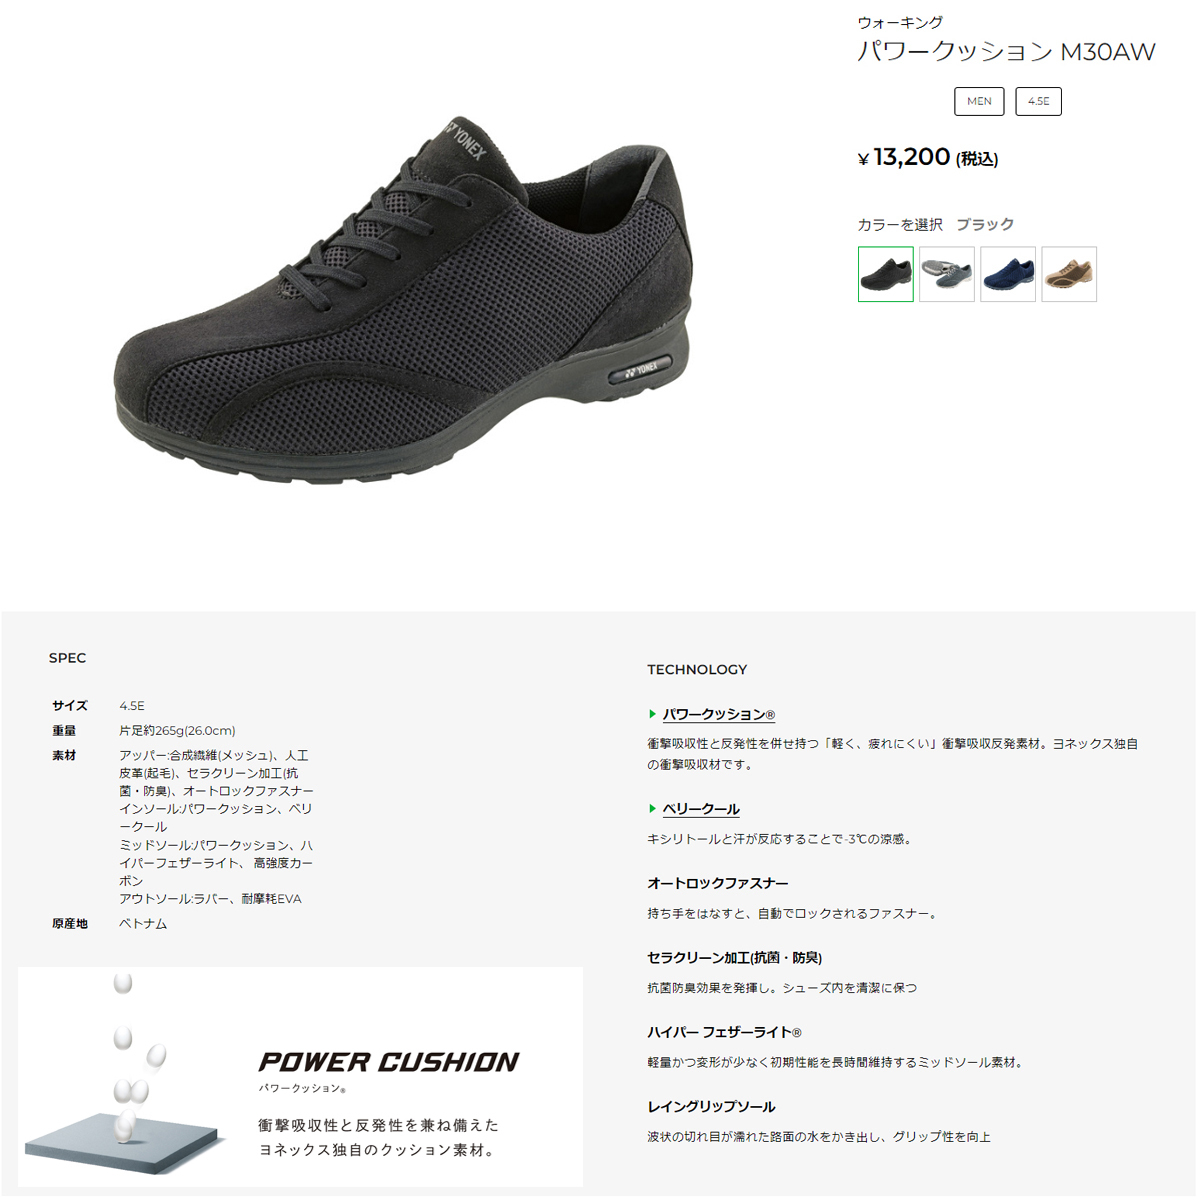 M30AW black 24.5cm Yonex YONEX power cushion walking shoes men's shoes wide width wide 4.5E mesh fastener 